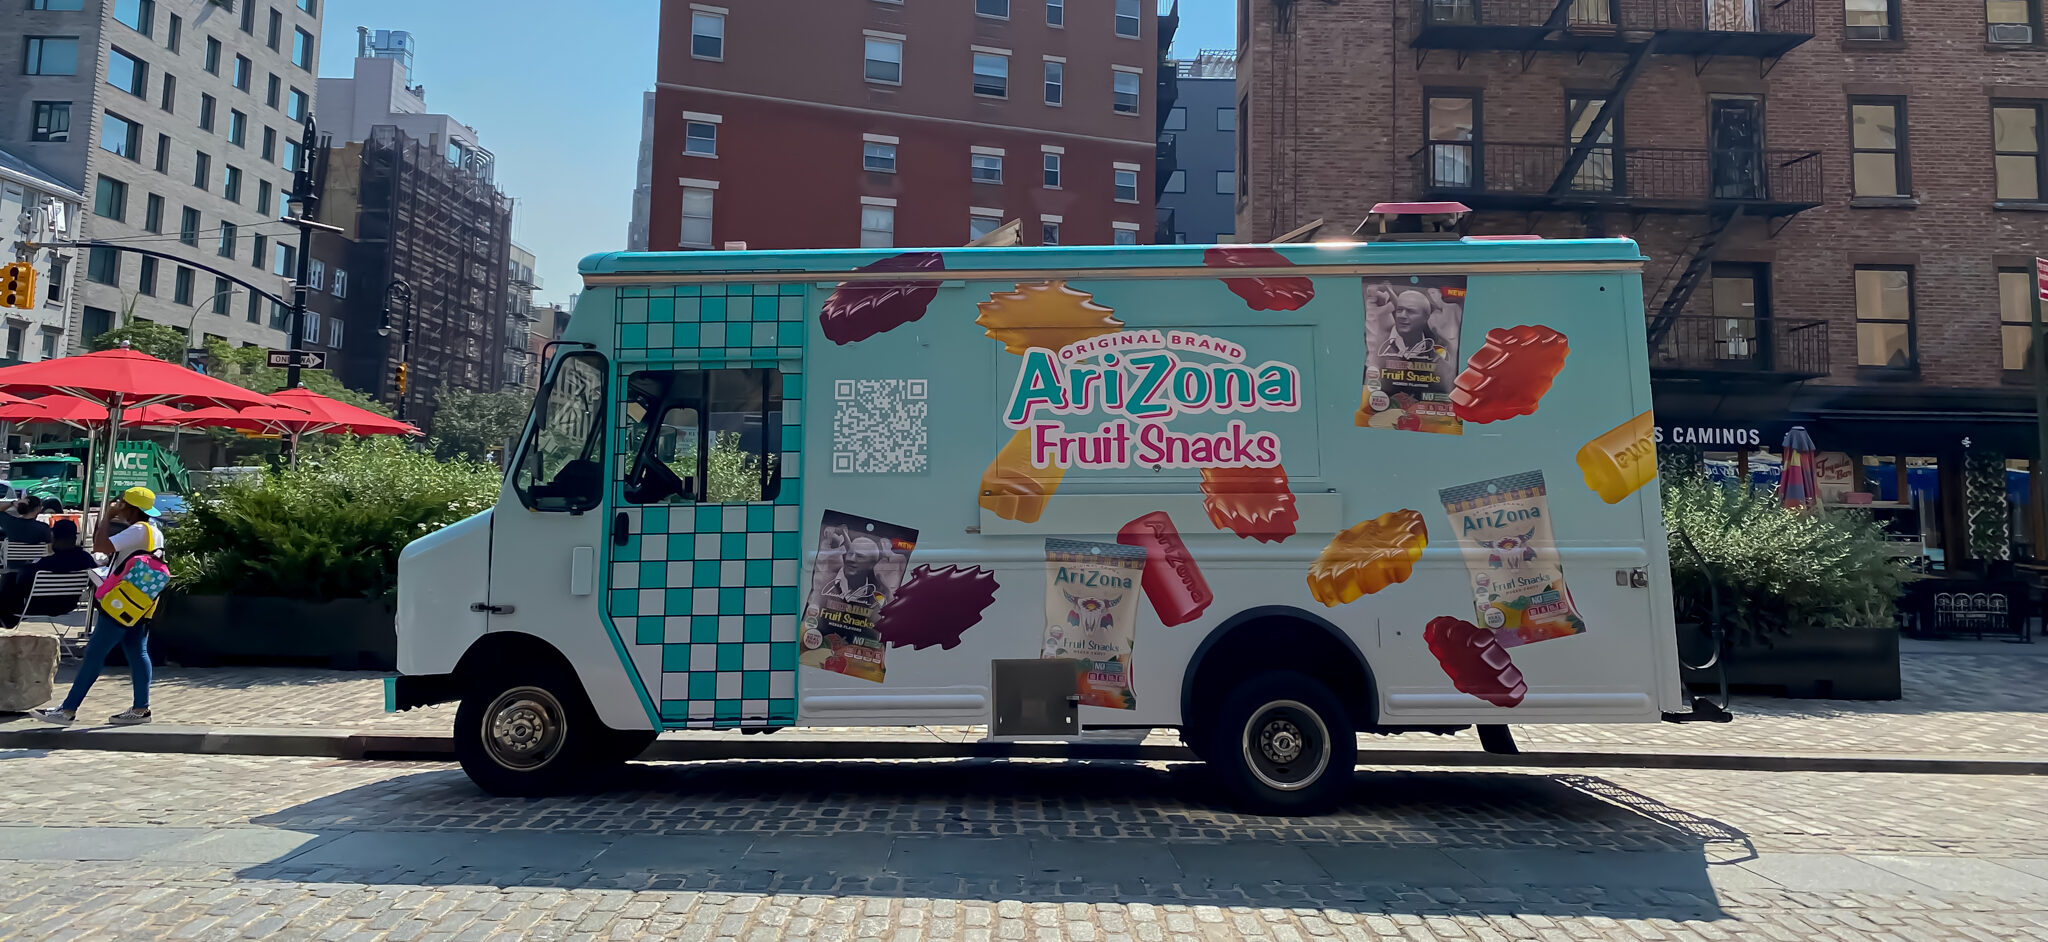 Arizona Fruit Snacks Product Launch In NYC